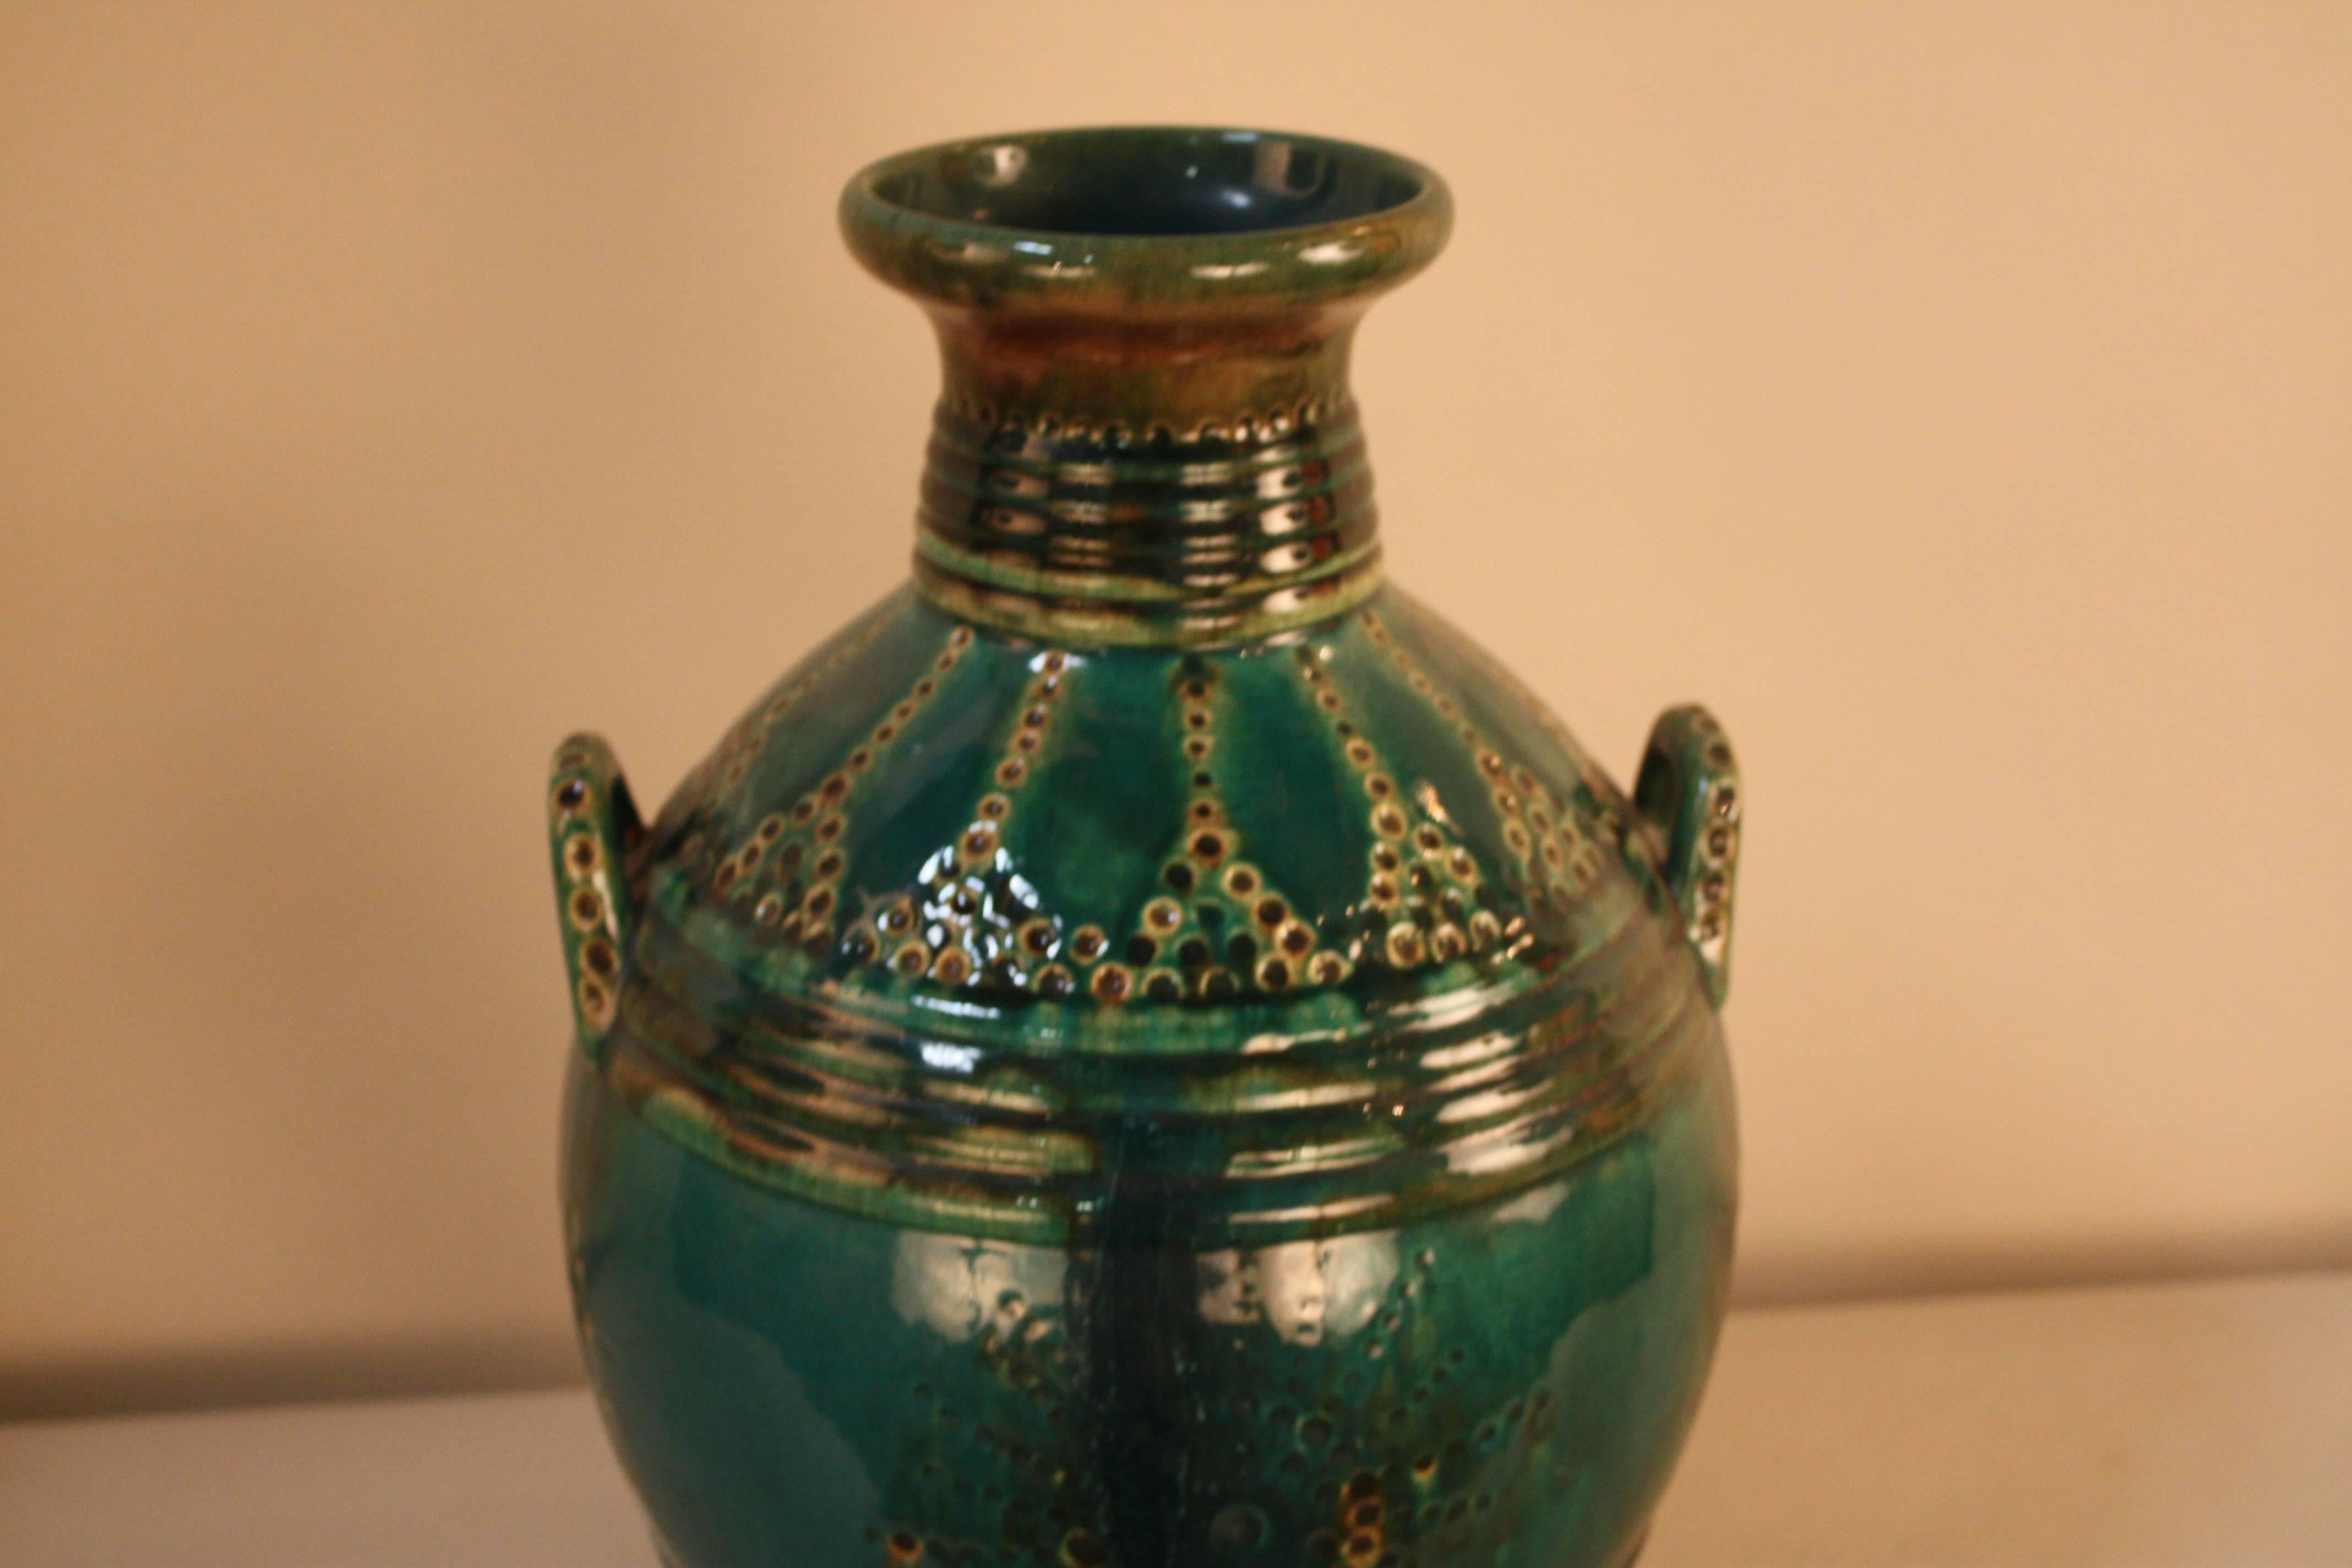 French 1930s green pottery vase by Primavera.